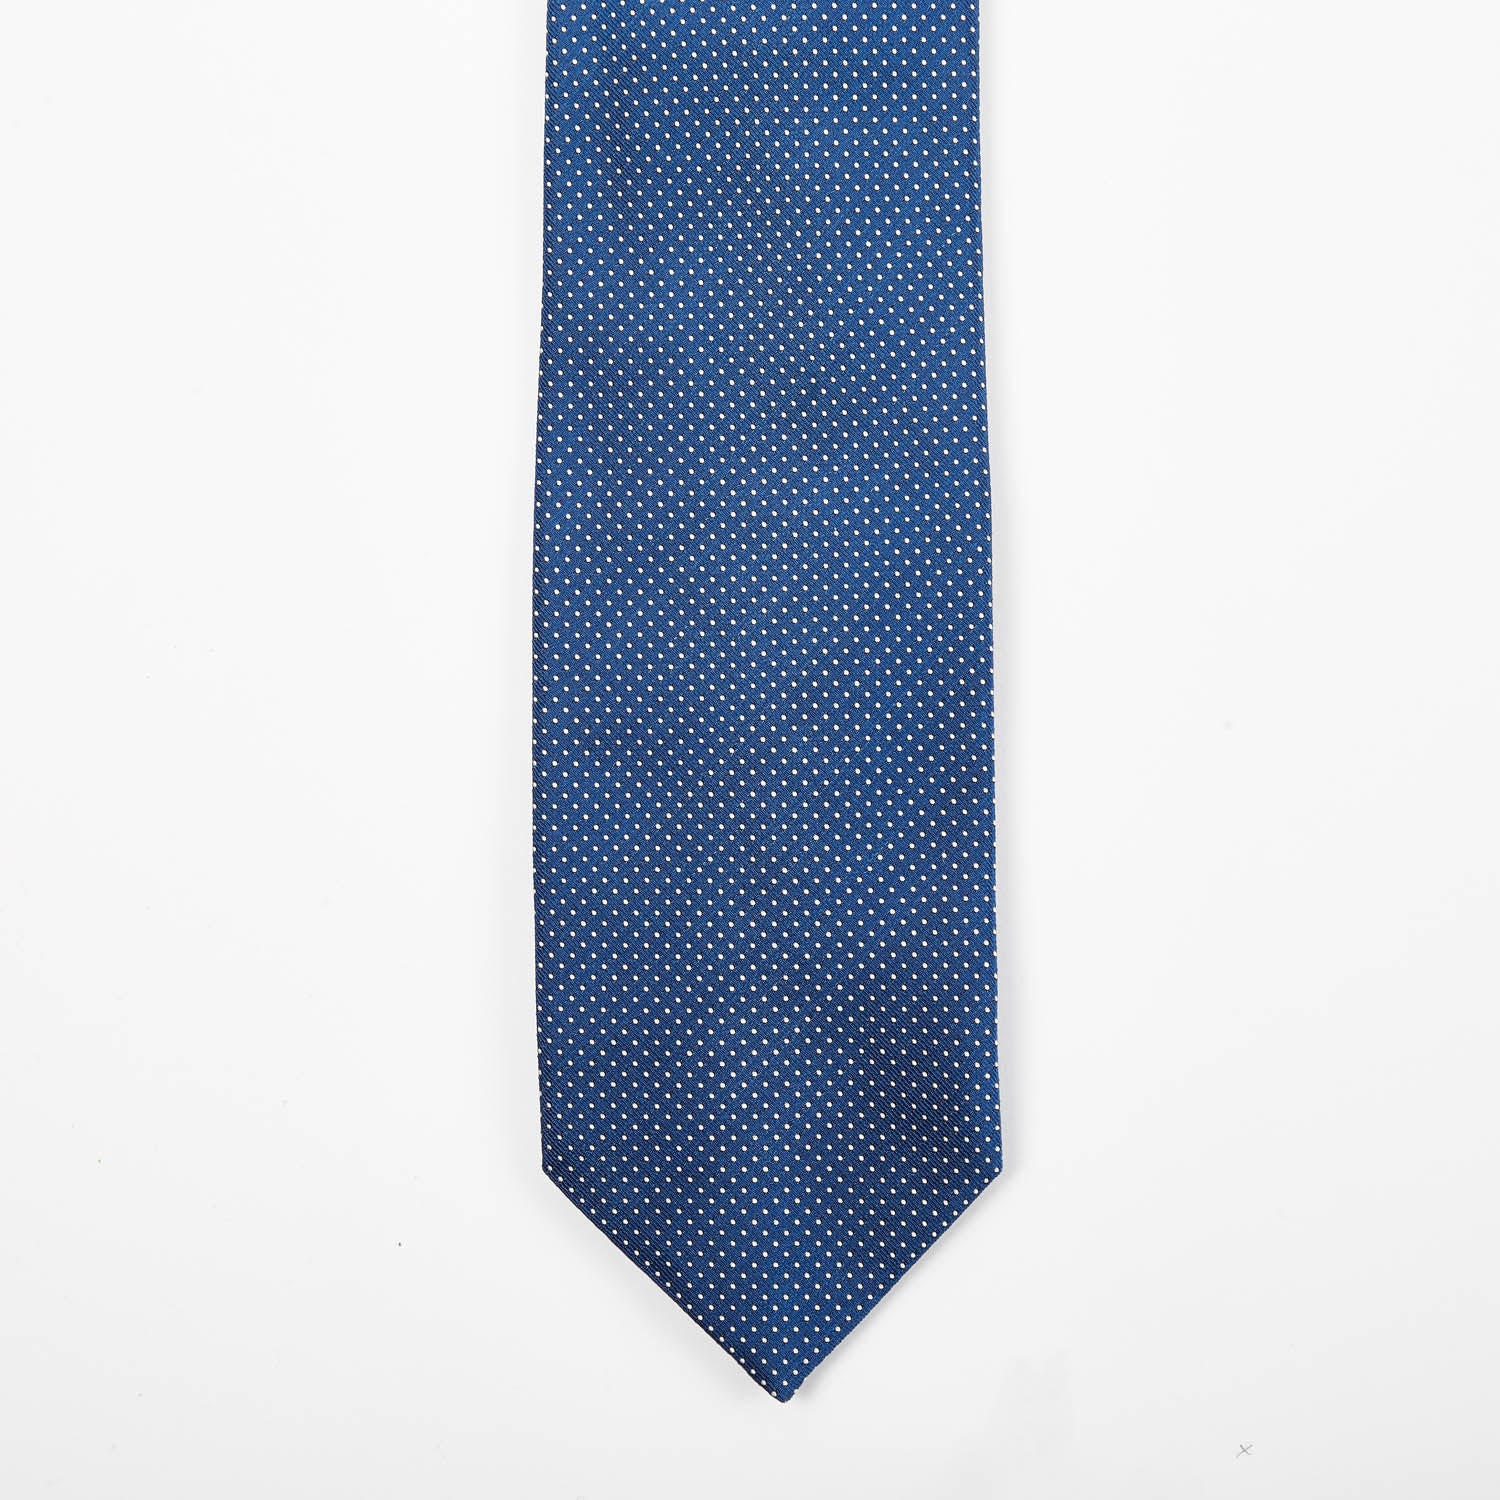 A handmade Sovereign Grade Blue Silk Micro Dot Tie from KirbyAllison.com in the United Kingdom.